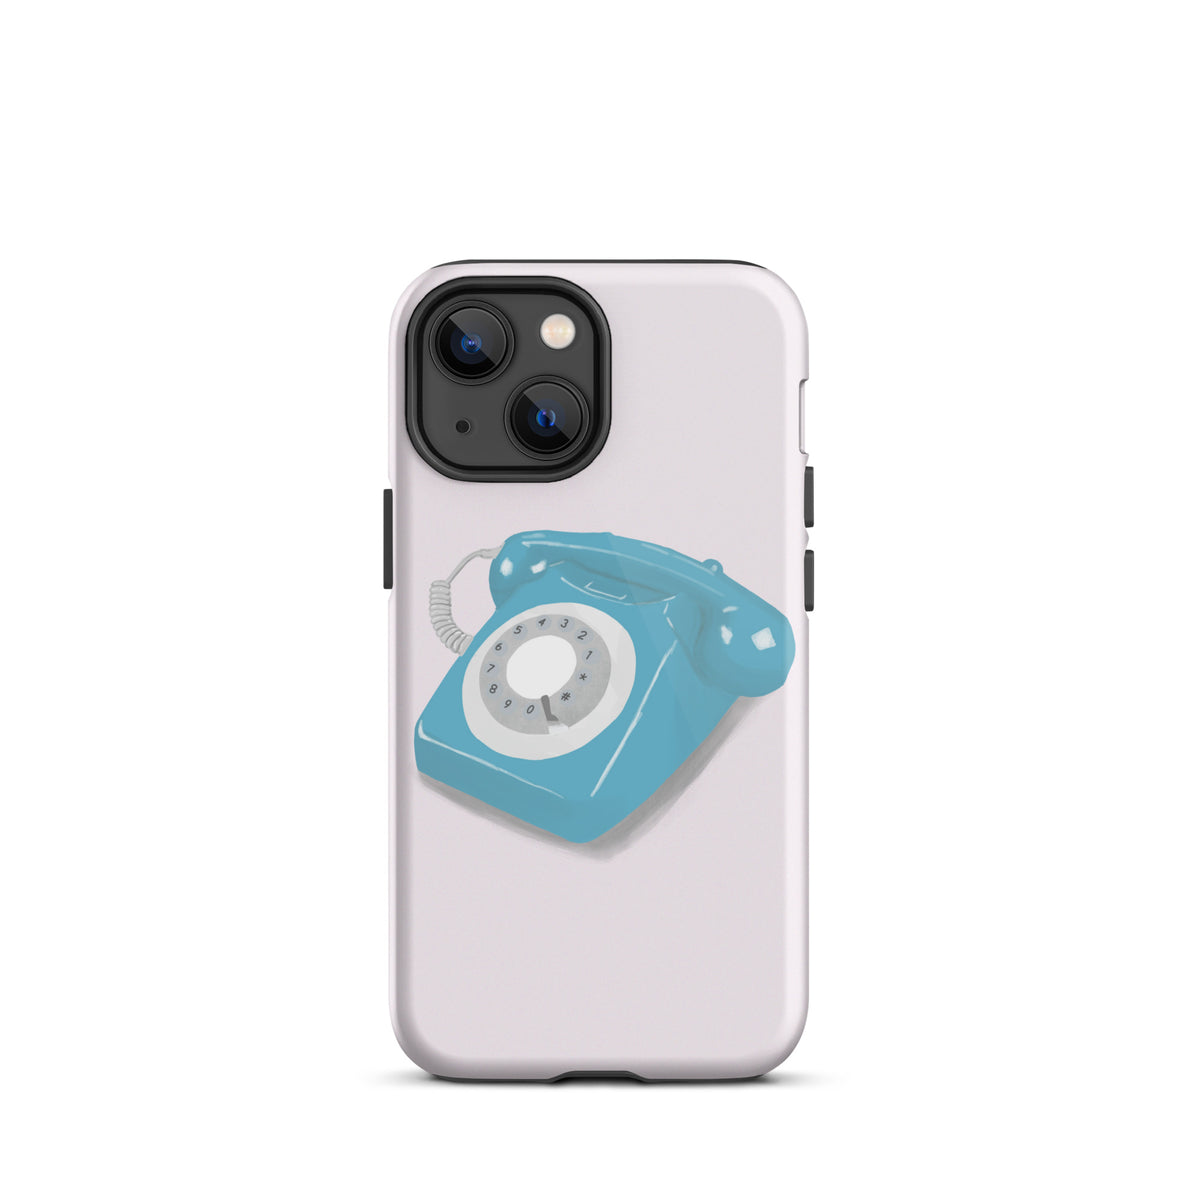 Blue phone iPhone case